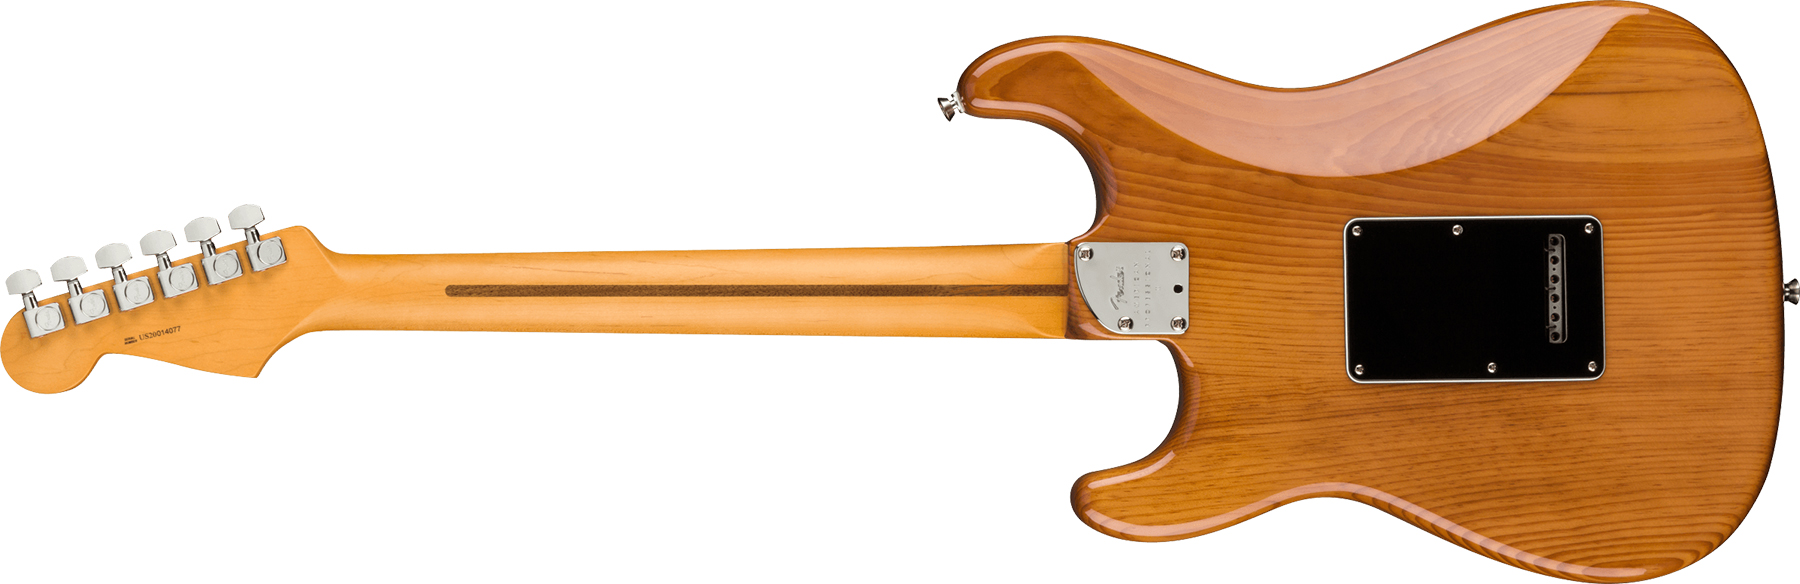 Fender Strat American Professional Ii Usa Rw - Roasted Pine - Guitarra eléctrica con forma de str. - Variation 1